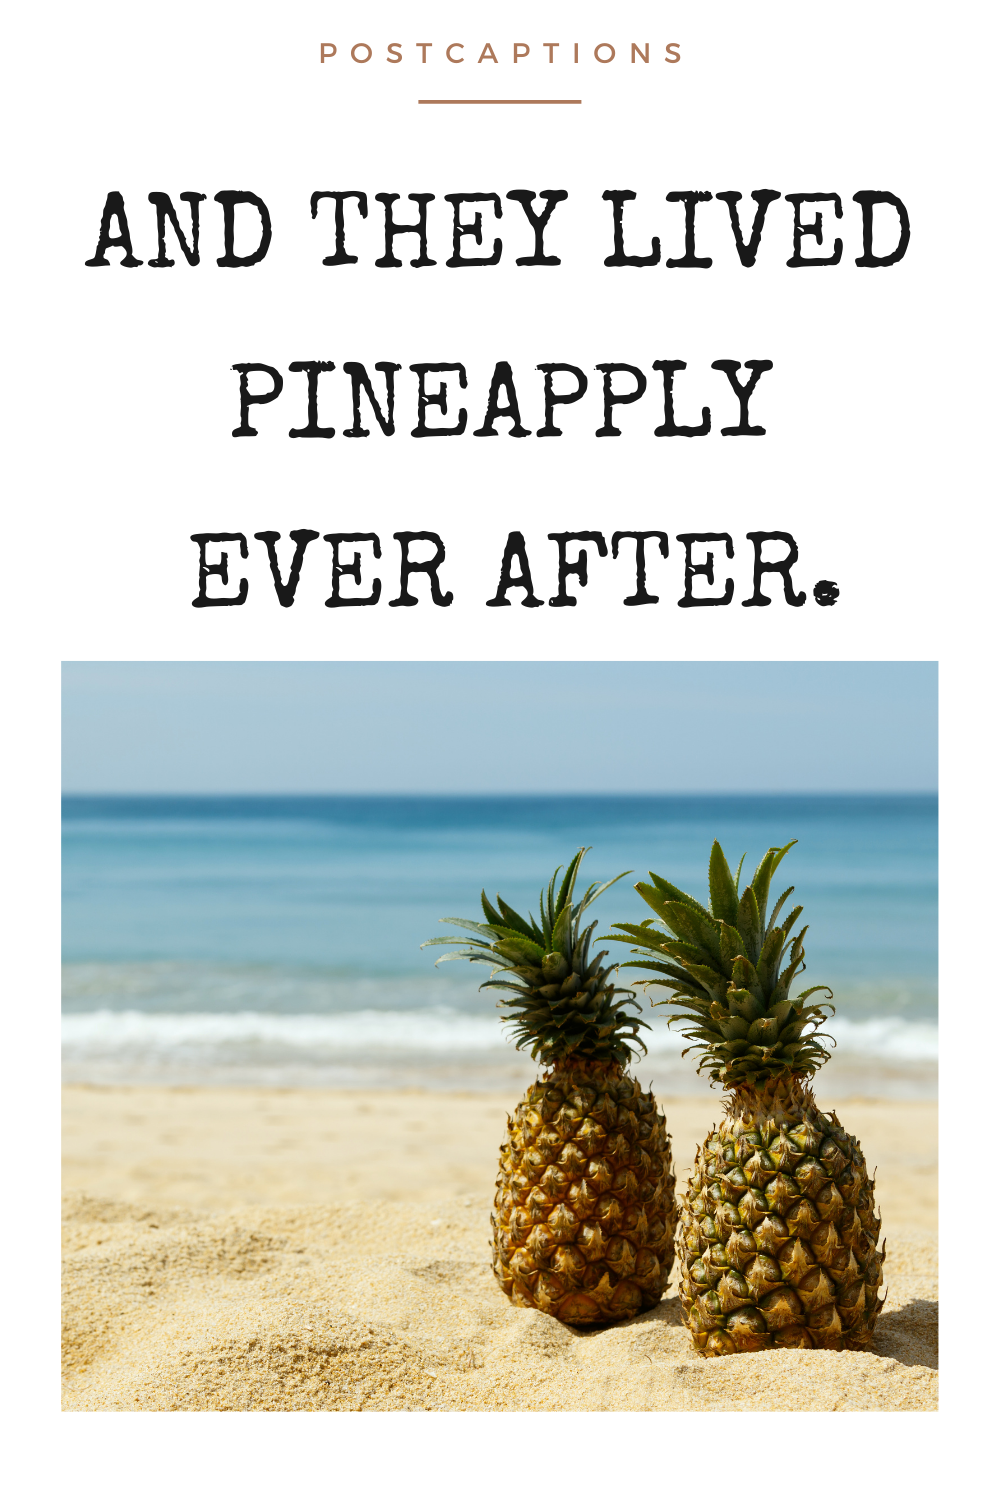 Pineapple puns